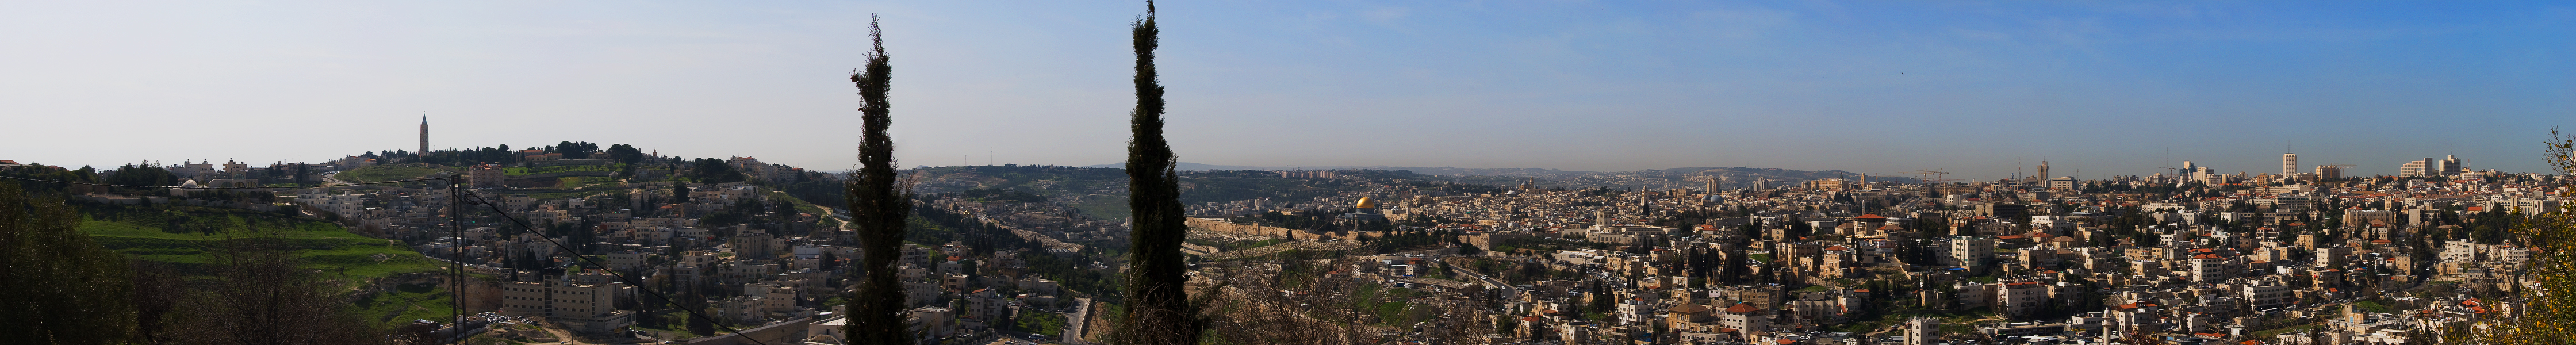 jerusalem panorama